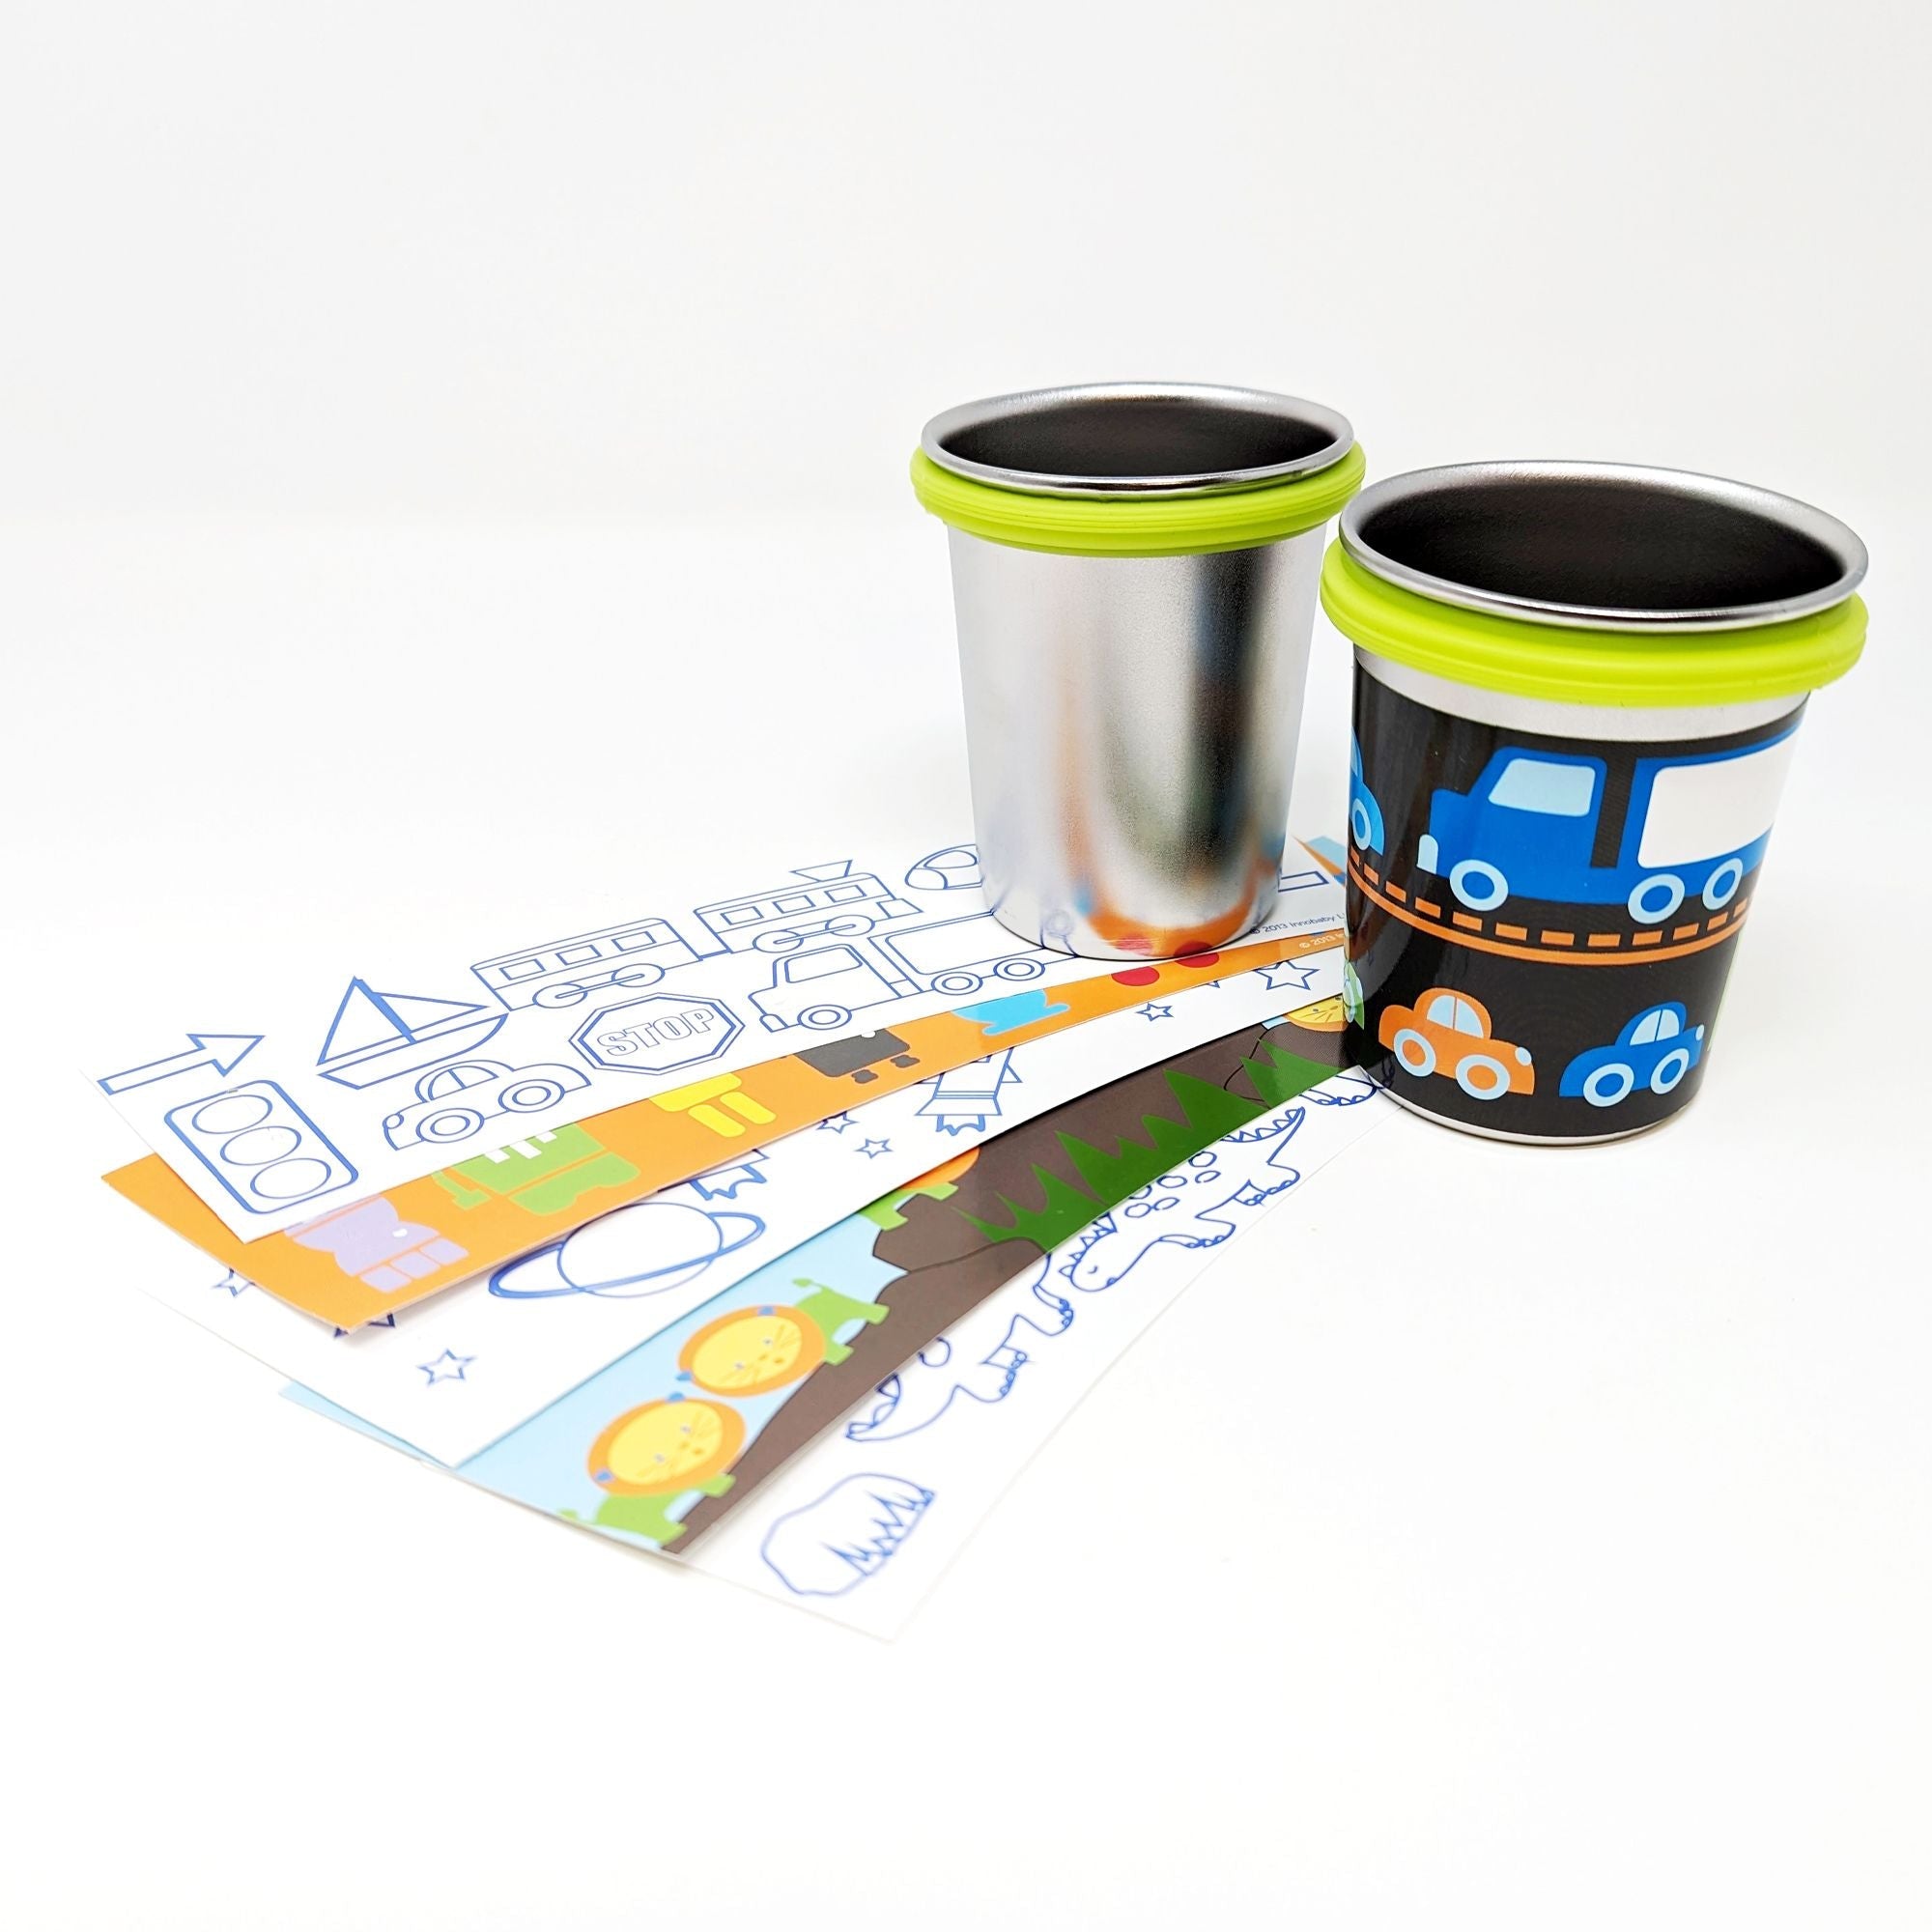 Nursin' SMART 9 oz Silicone Training Straw Cup - 2 Colors - Innobaby